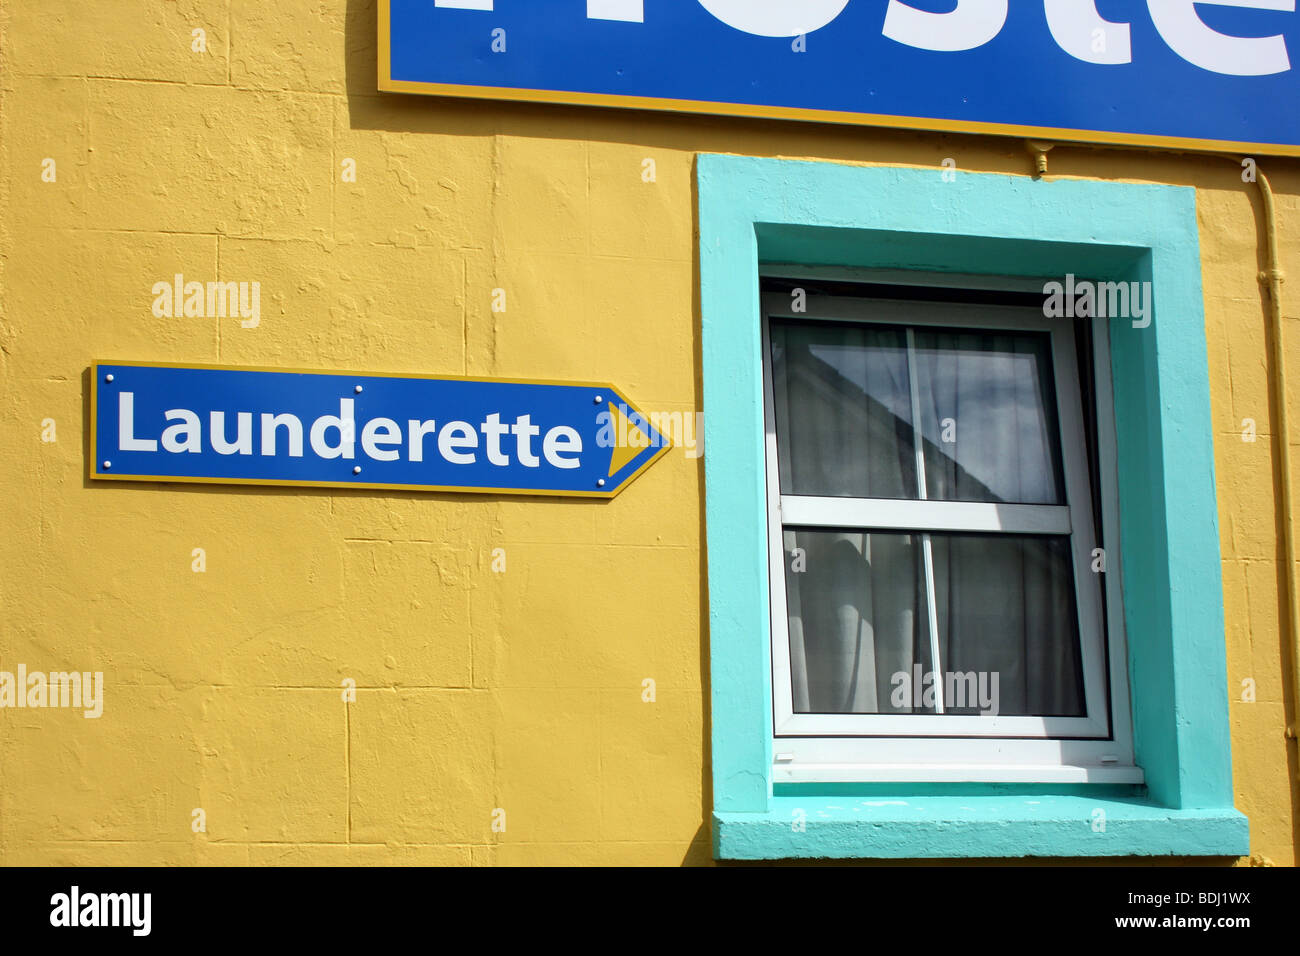 Launderette sign, Portree, Isle of Skye, Scotland Stock Photo